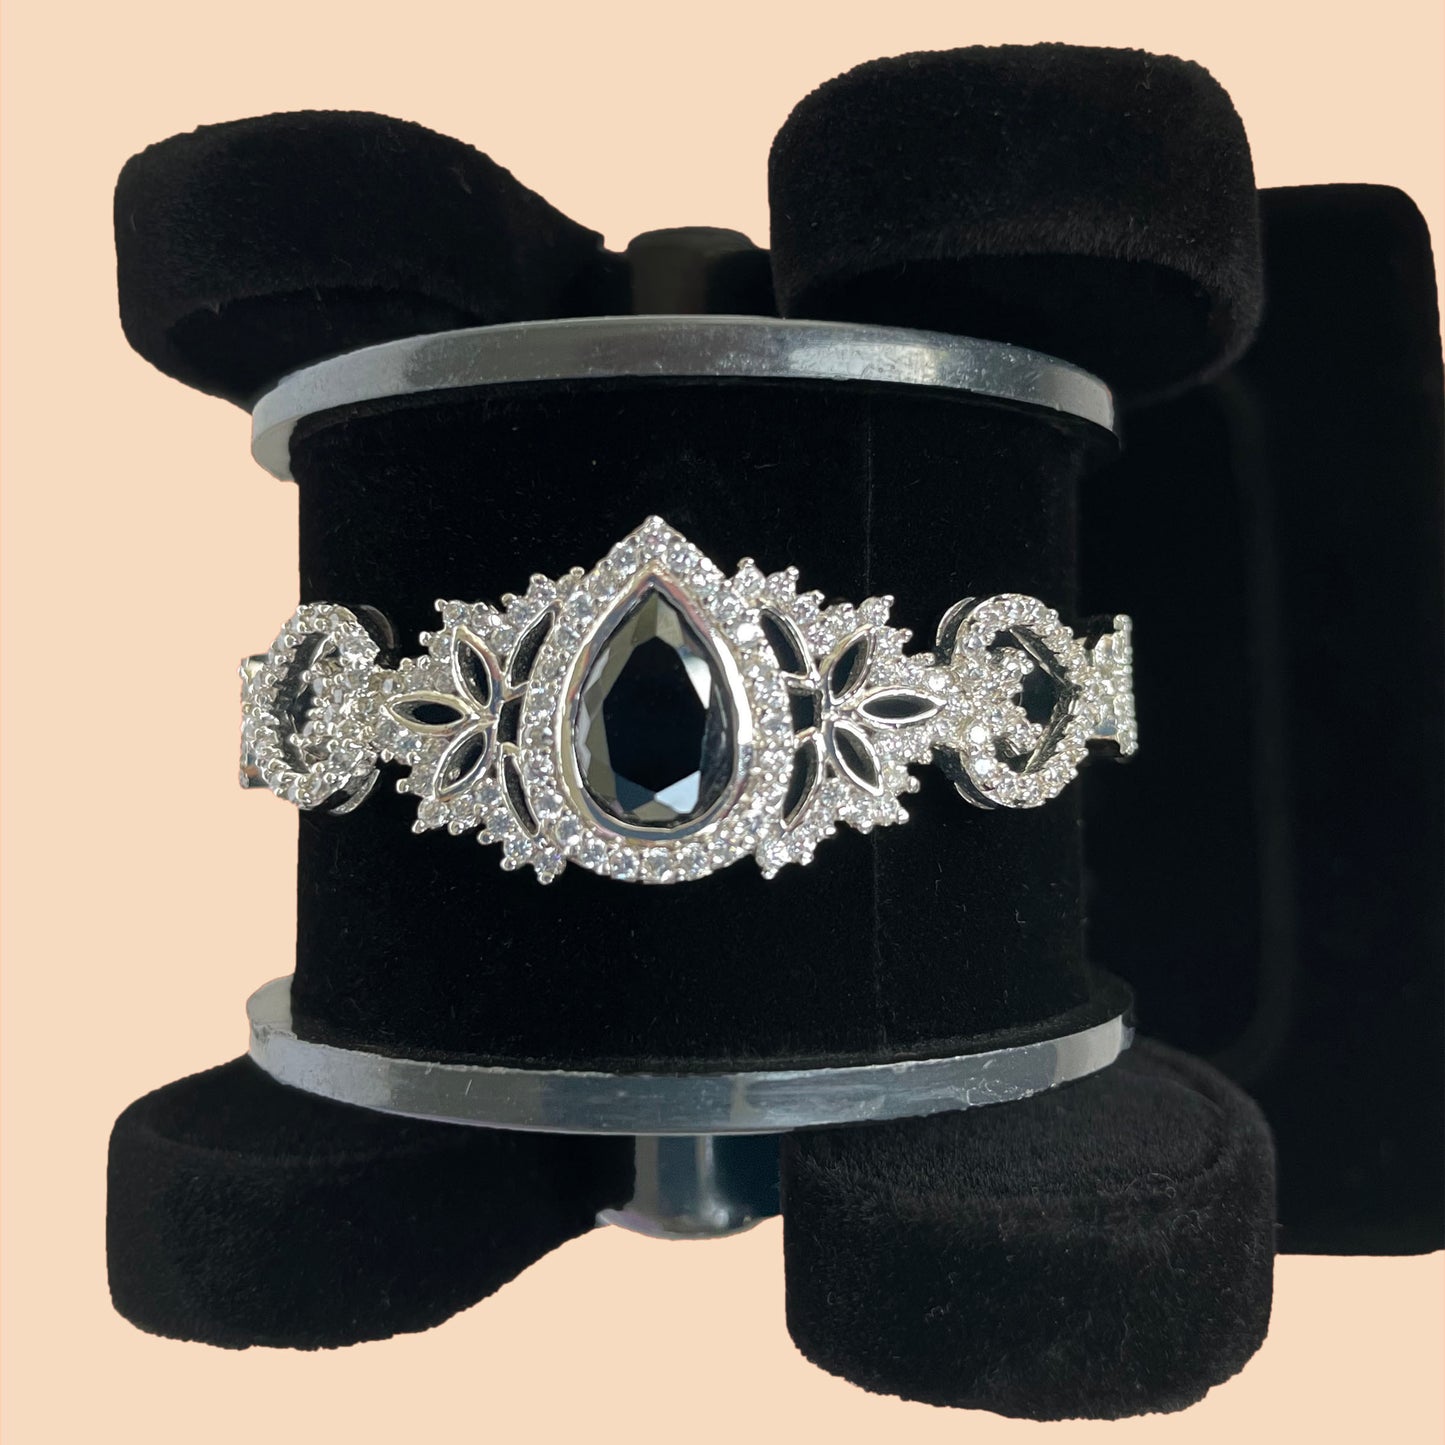 Bracelet with Black Stone